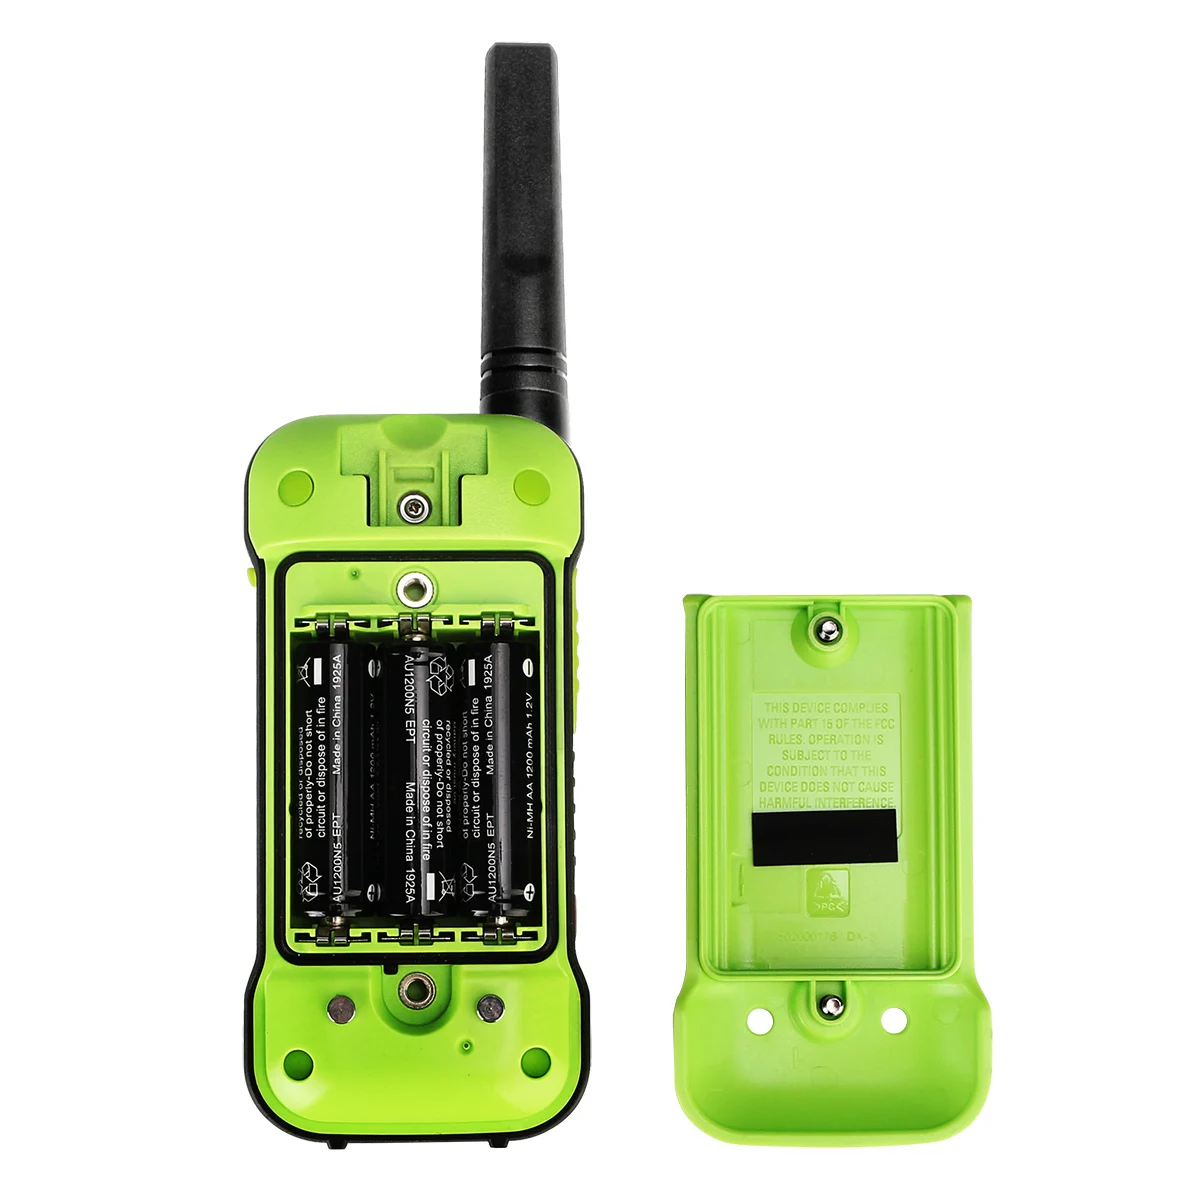 Wholesale RETEVIS RT649P IP67 Waterproof Two-way Radio Floating Rechargeable  PMR446 Walkie Talkie From